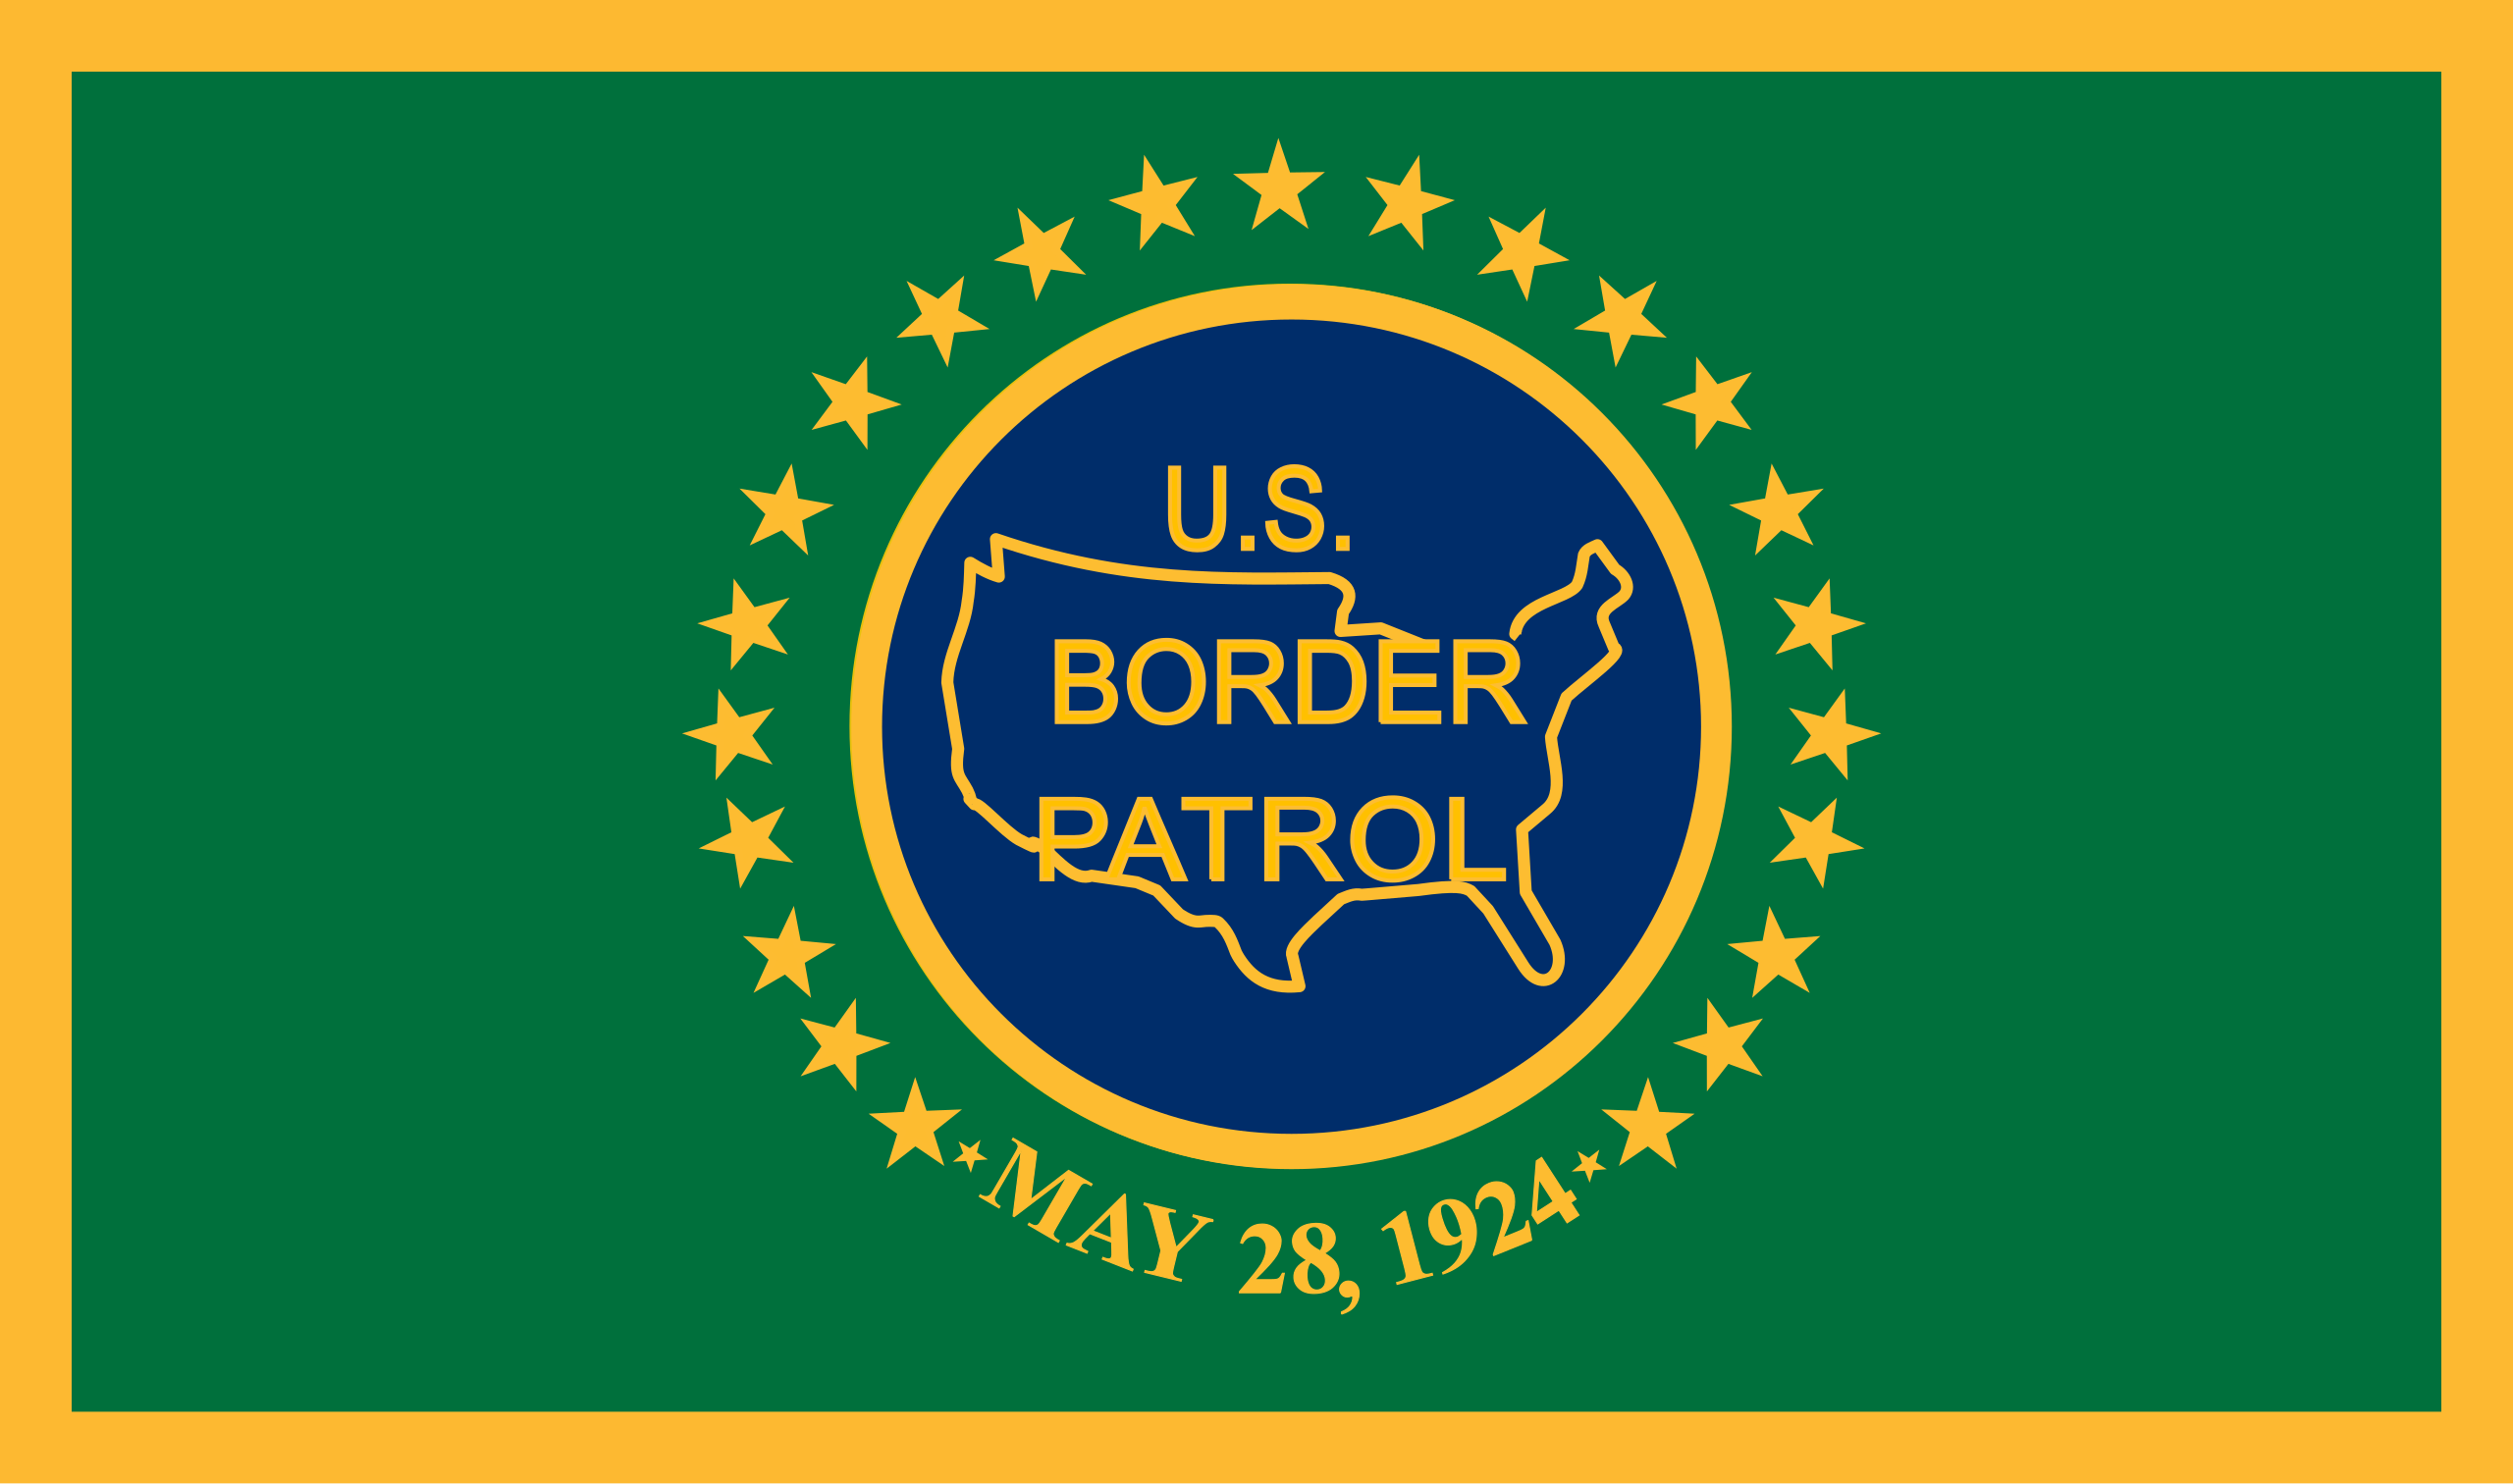 United States Border Patrol - Wikipedia